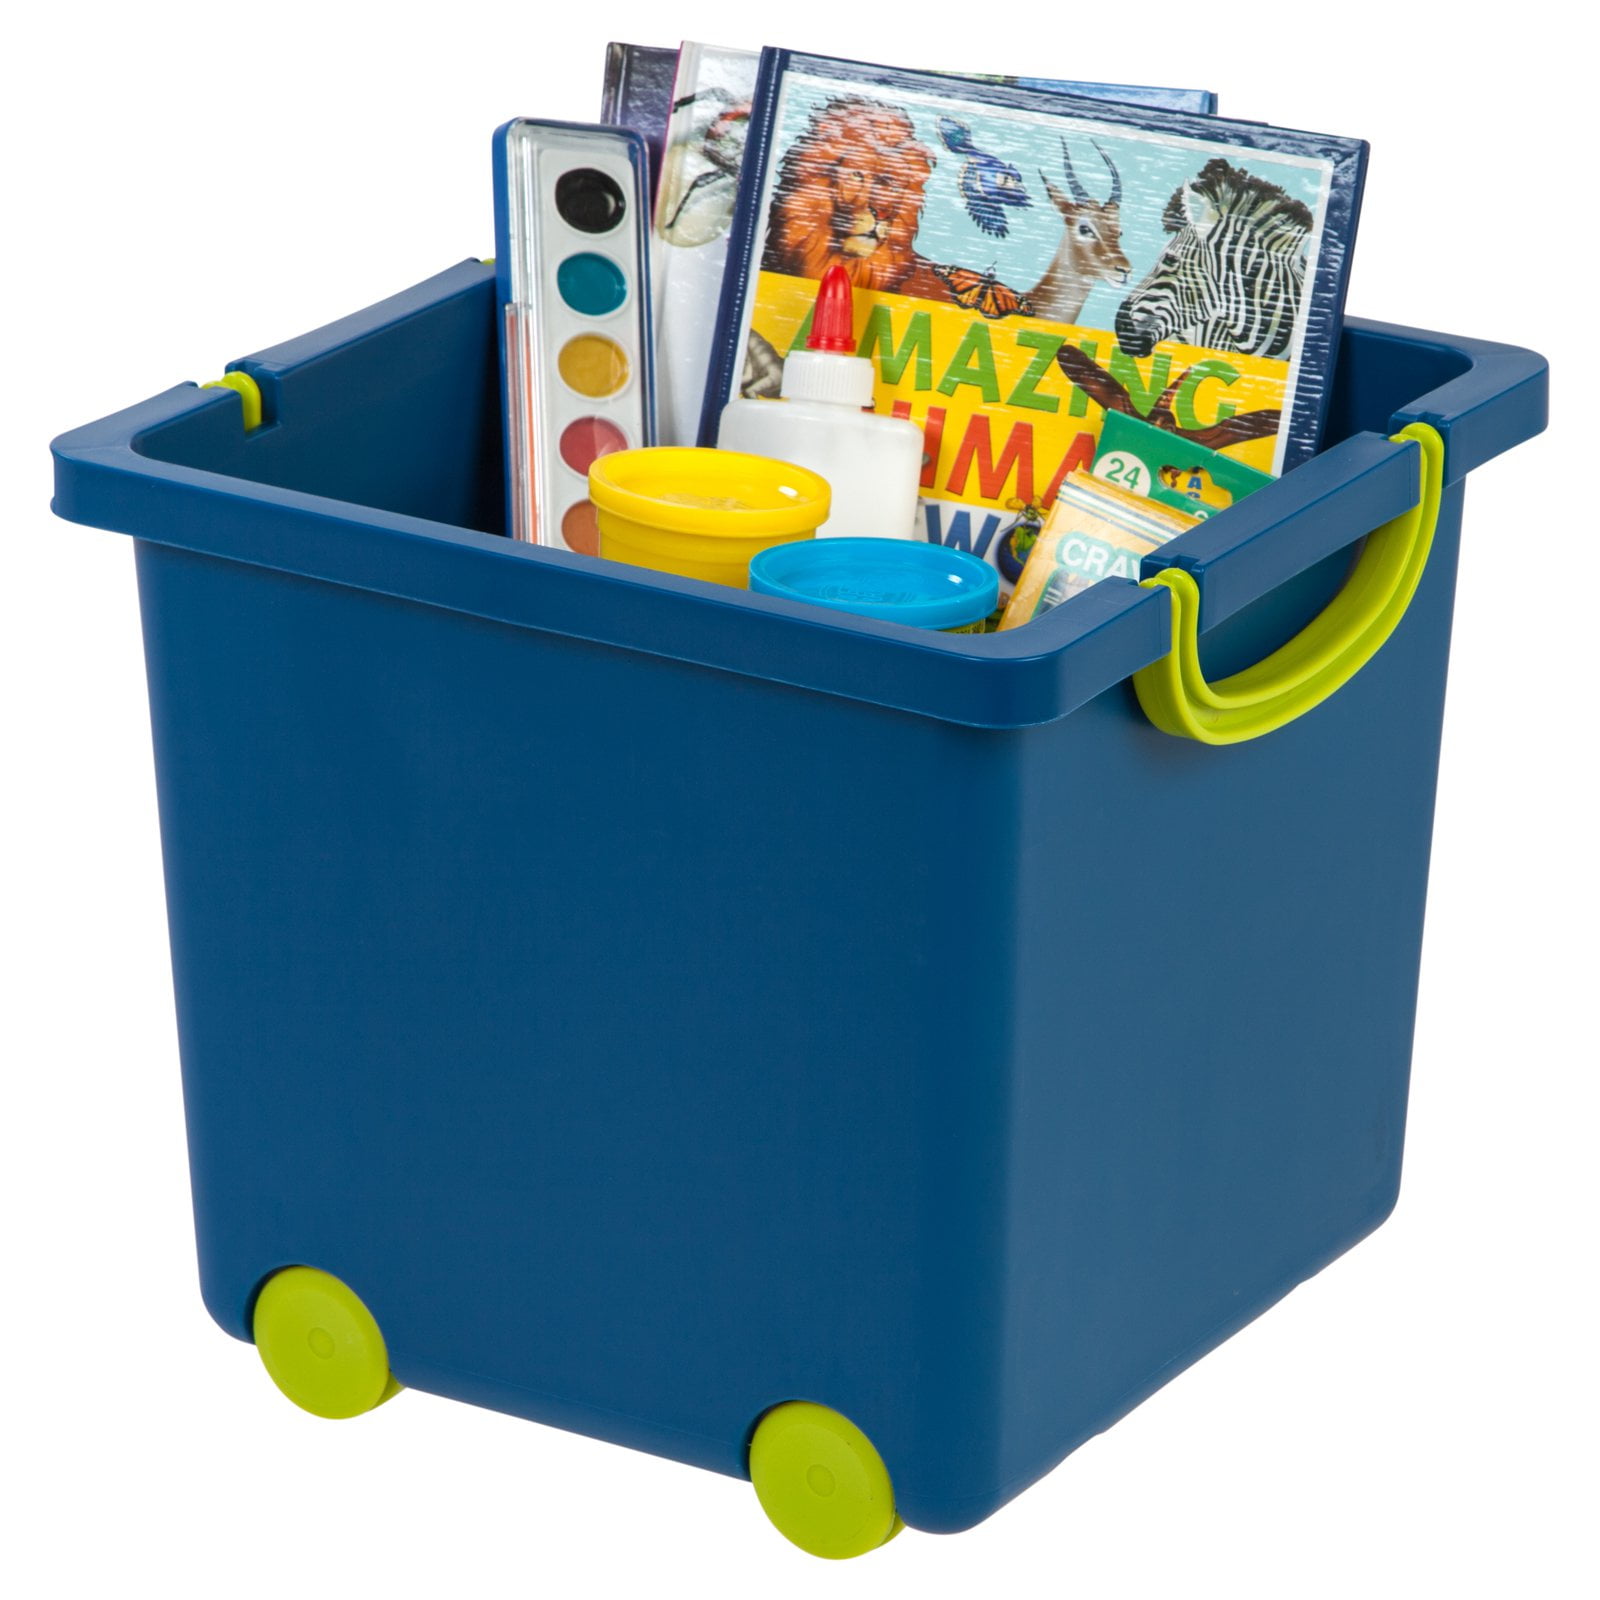 IRIS USA, Children's Plastic Toy Storage Box, Blue